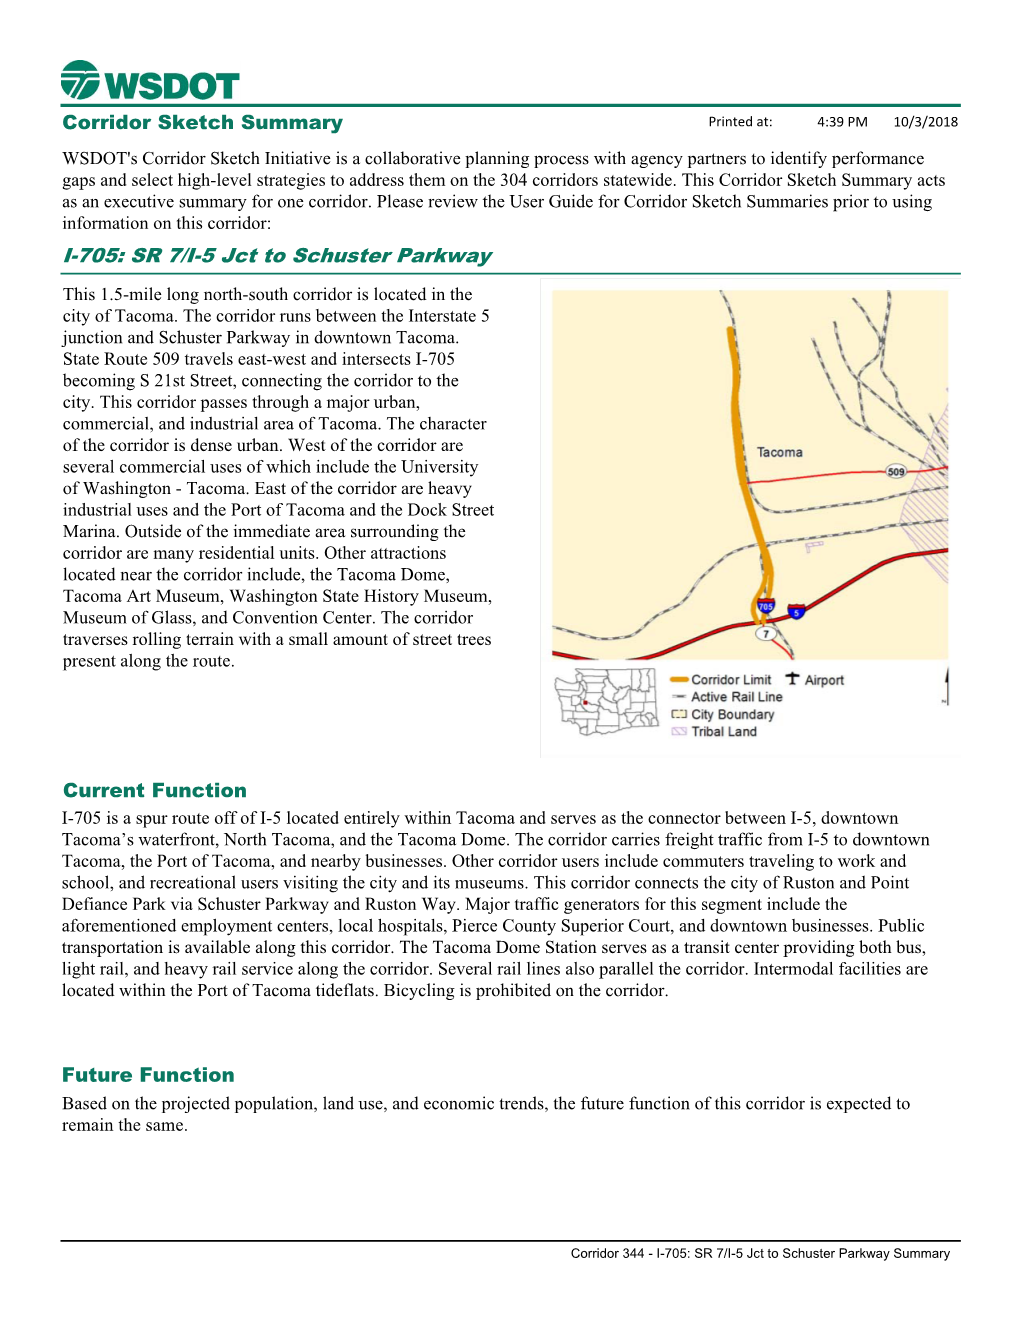 I-705: SR 7/I-5 Jct to Schuster Parkway Corridor Sketch Summary